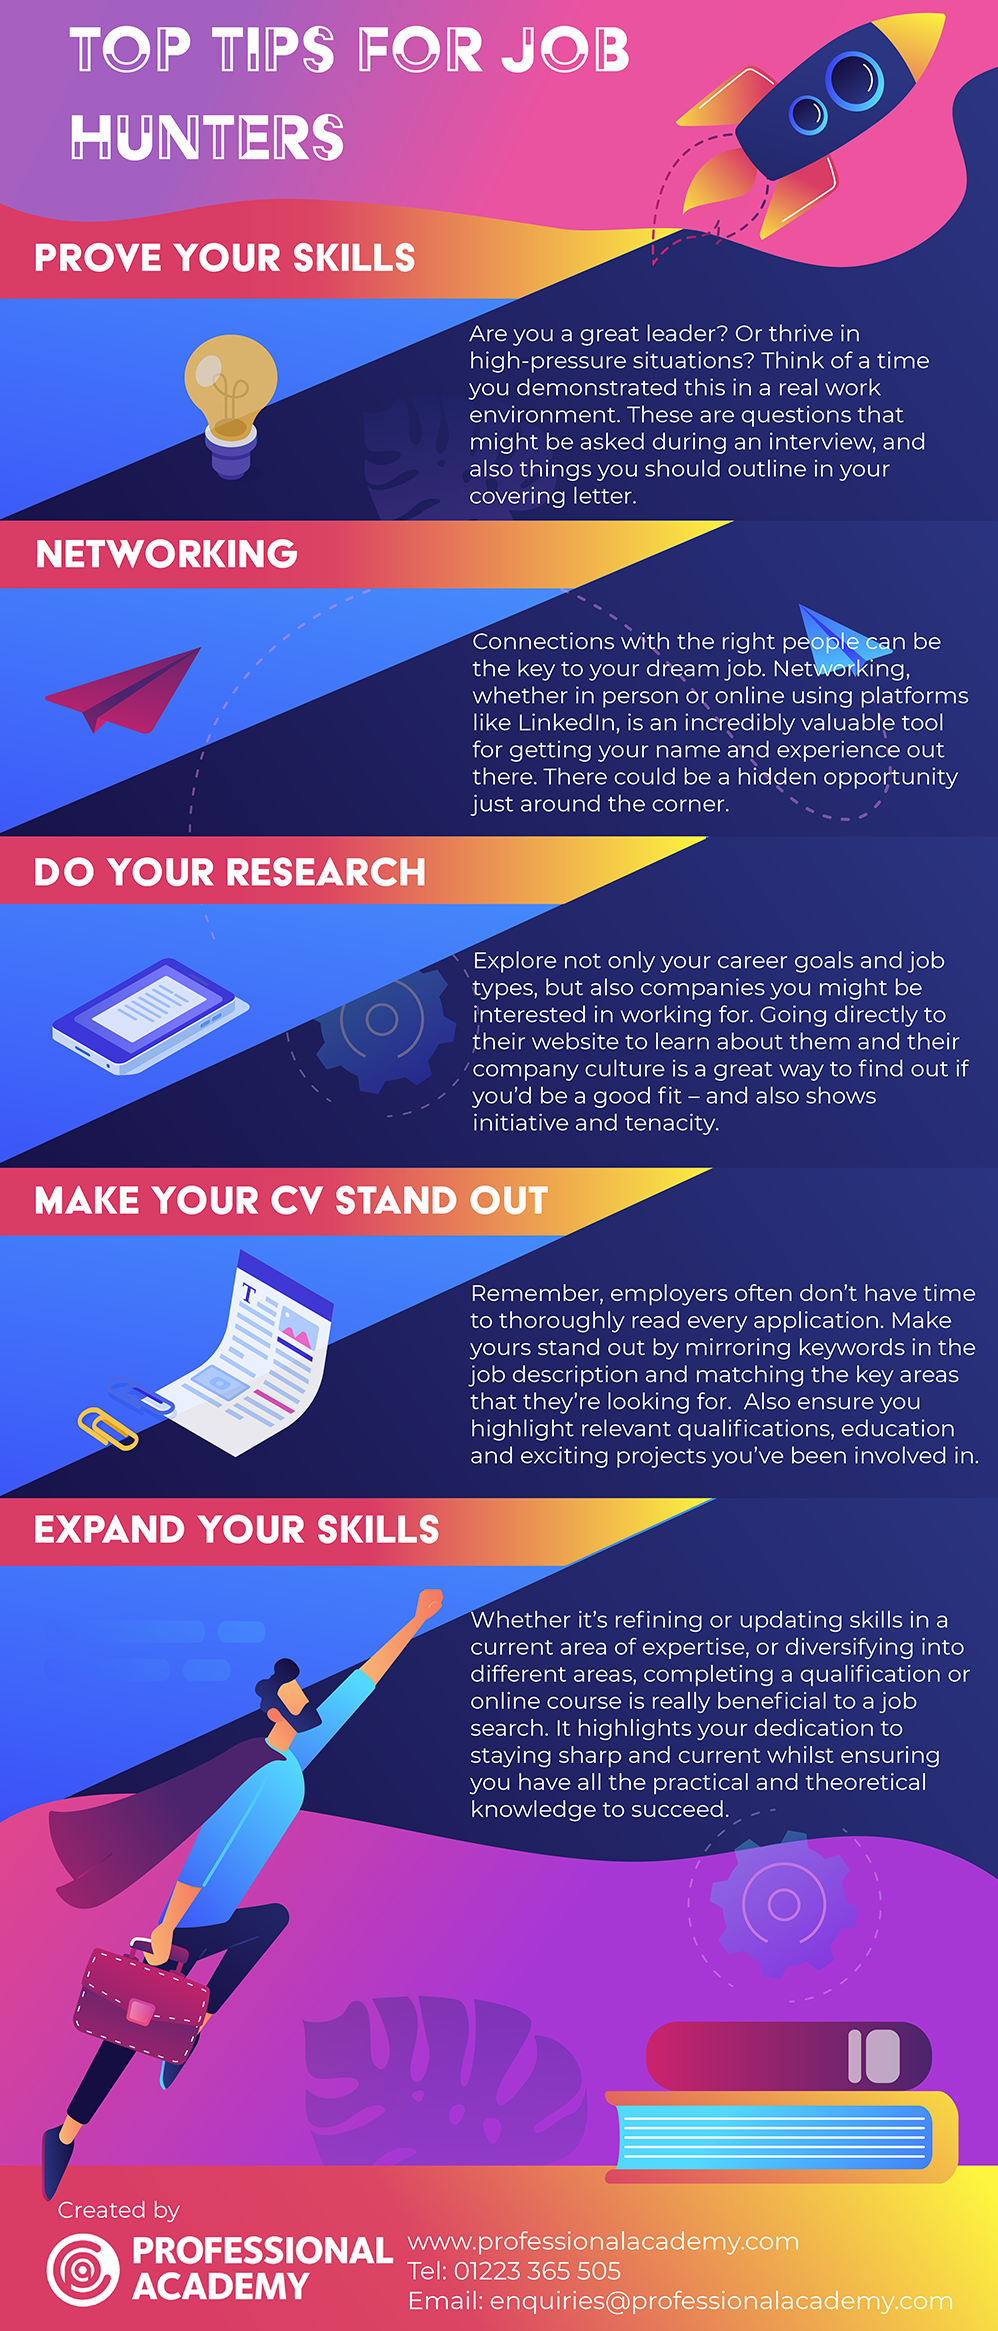 Job hunting tips infographic